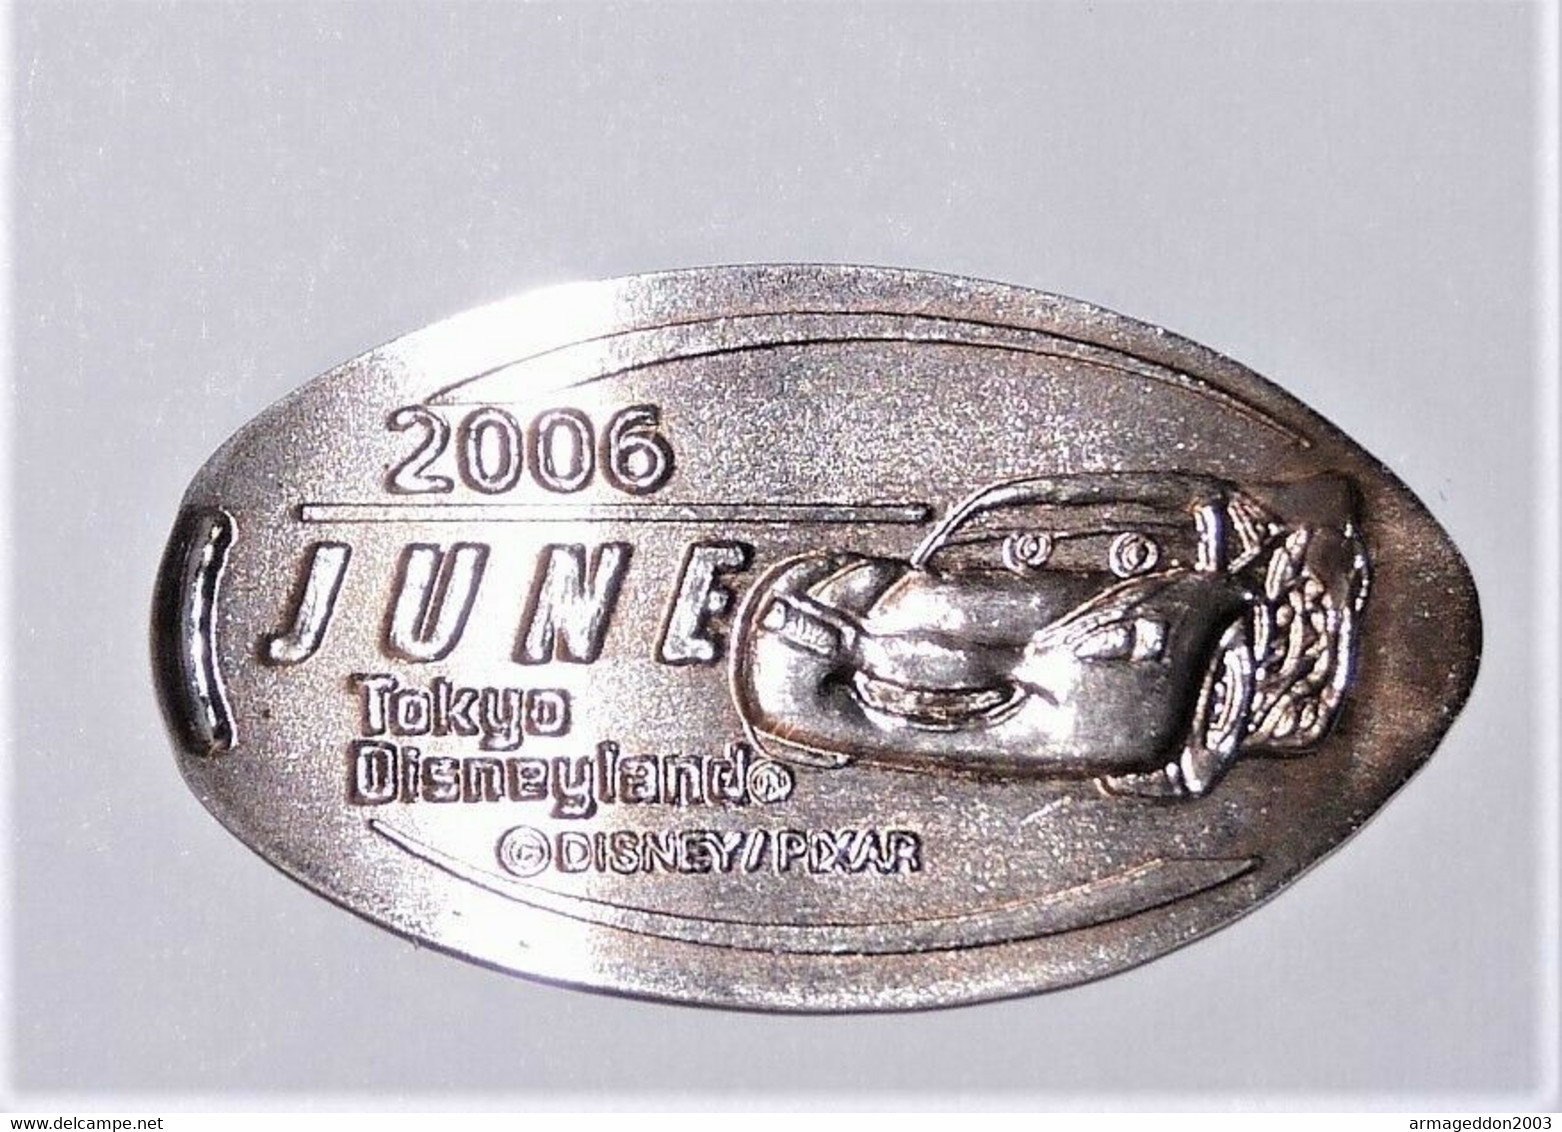 Pressed Coins Souvenir Medallion Médaillon Medaille Cars 2006 Pixar Disney - Souvenirmunten (elongated Coins)